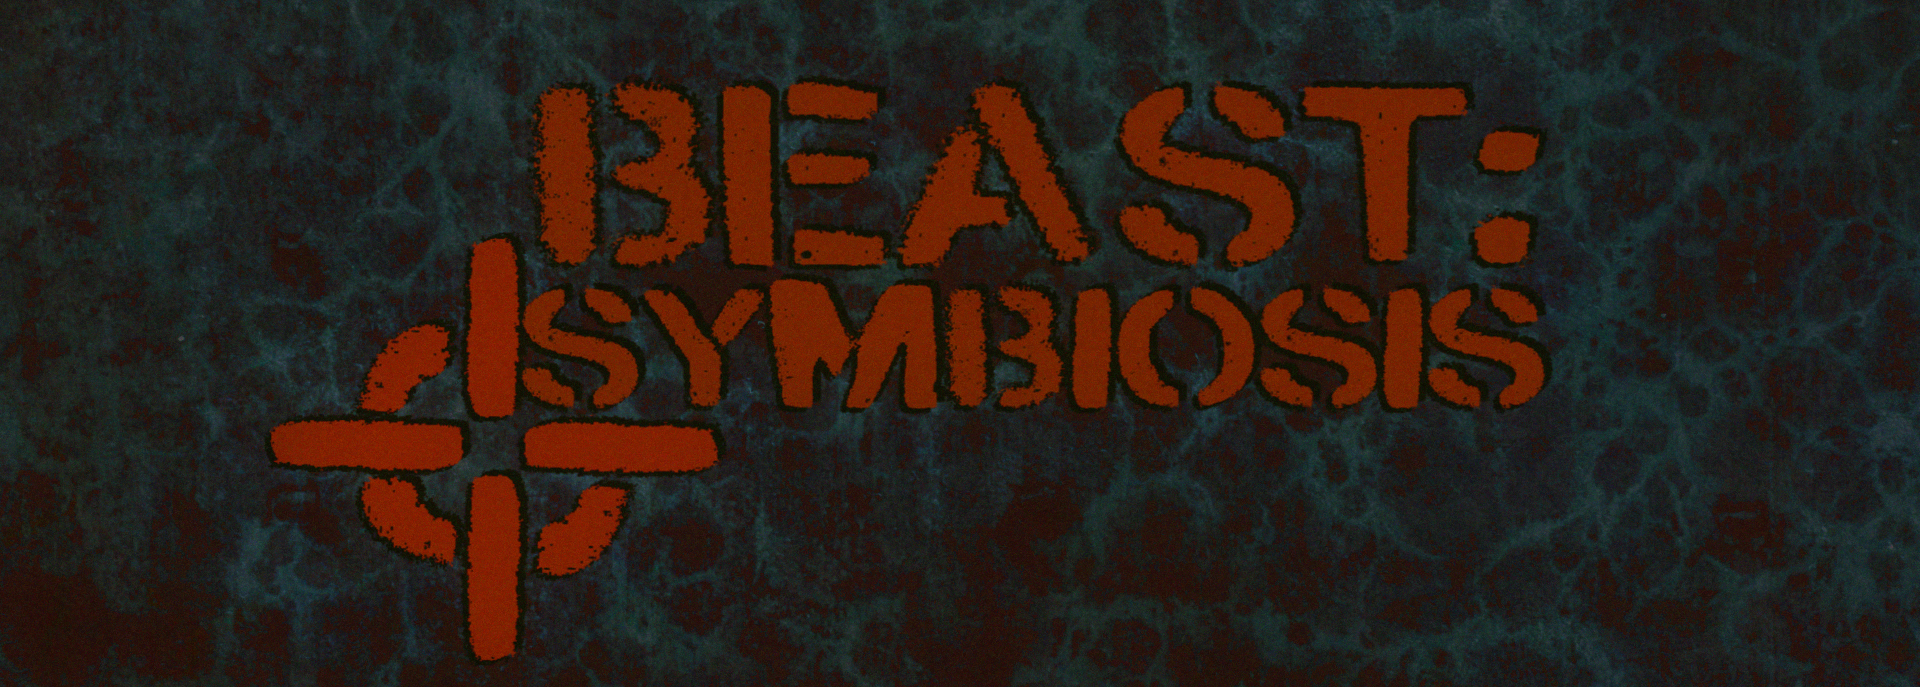 BEAST:SYMBIOSIS